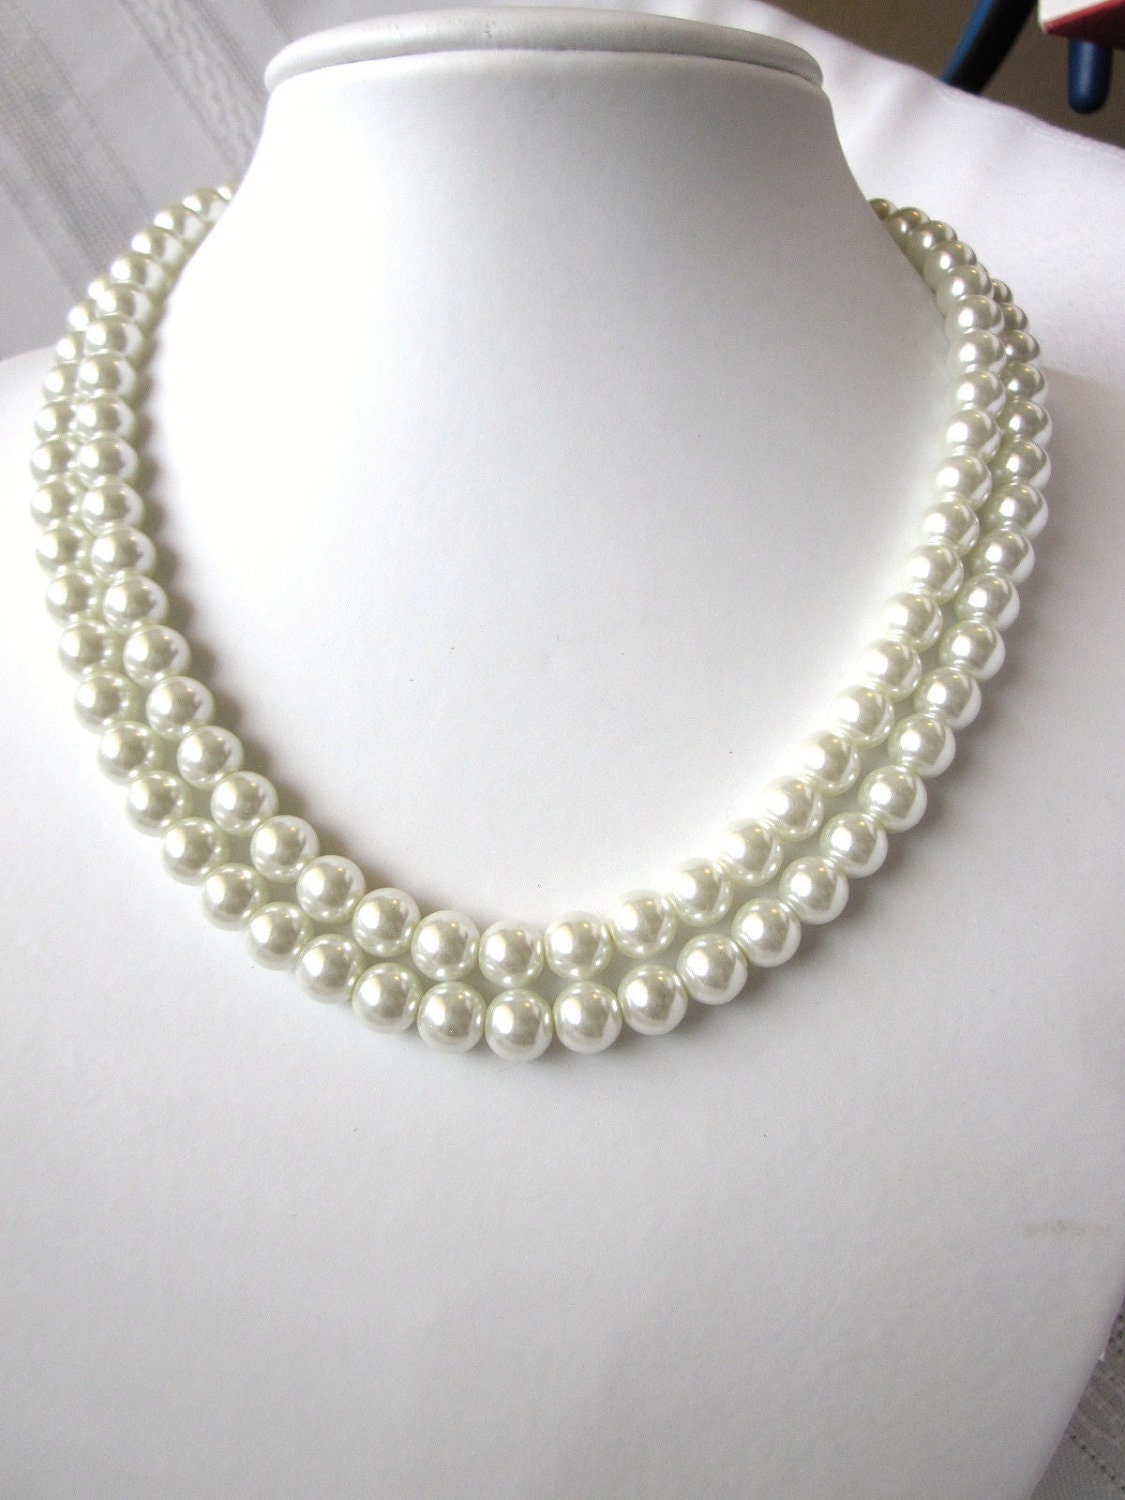 Double Strand Pearl Necklace Elegant Swarovski Pearls | Etsy